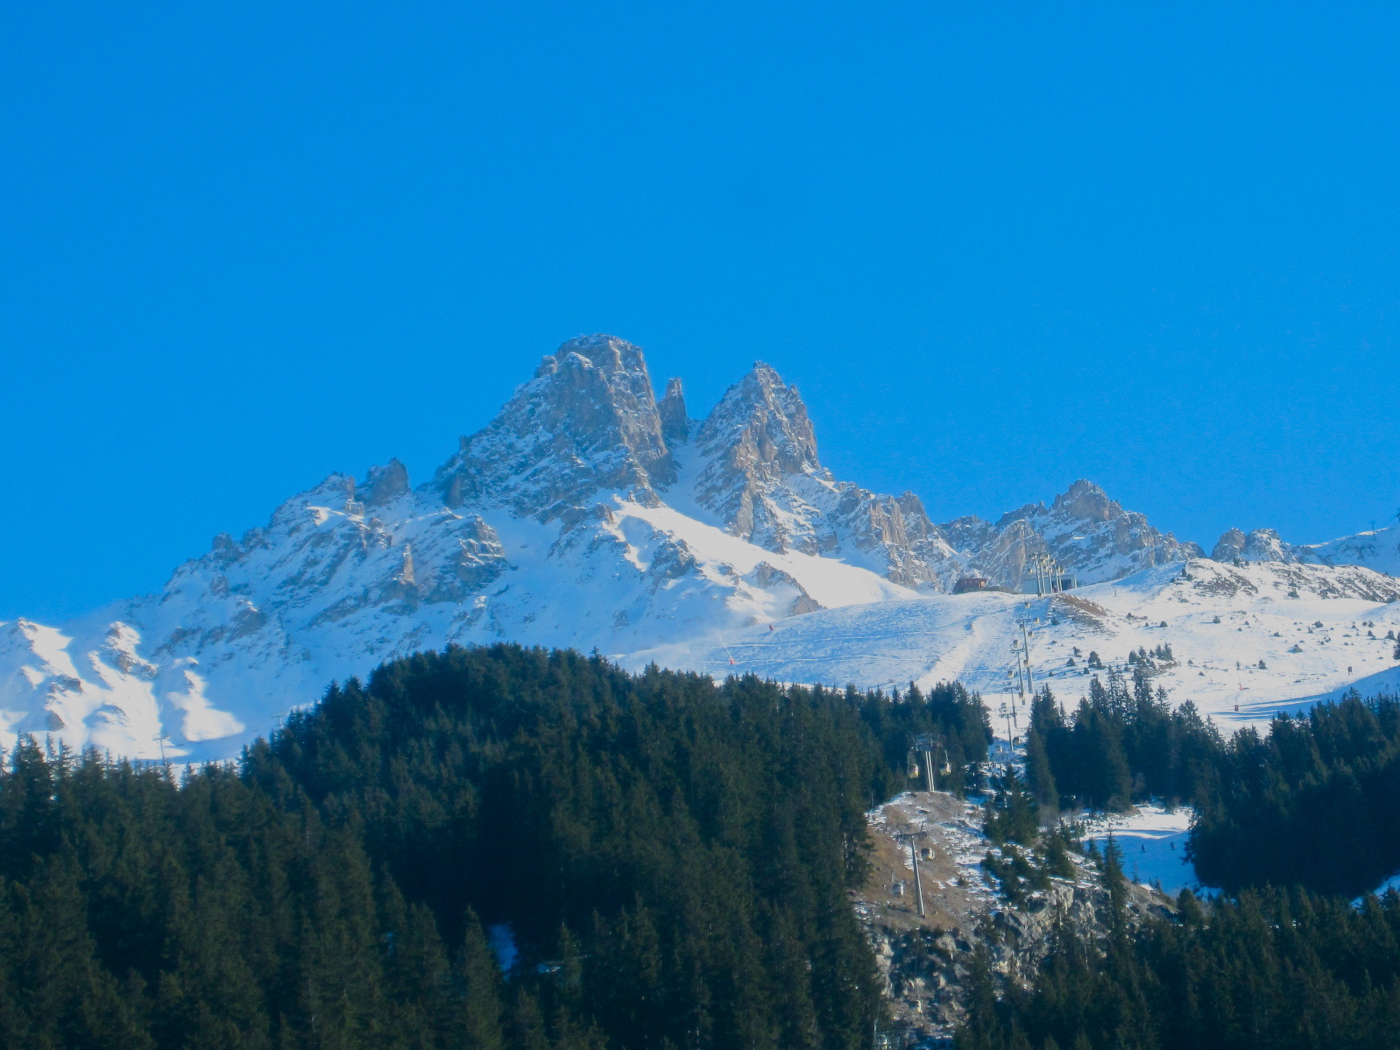 Mountains in the ski resort of Meribel, France